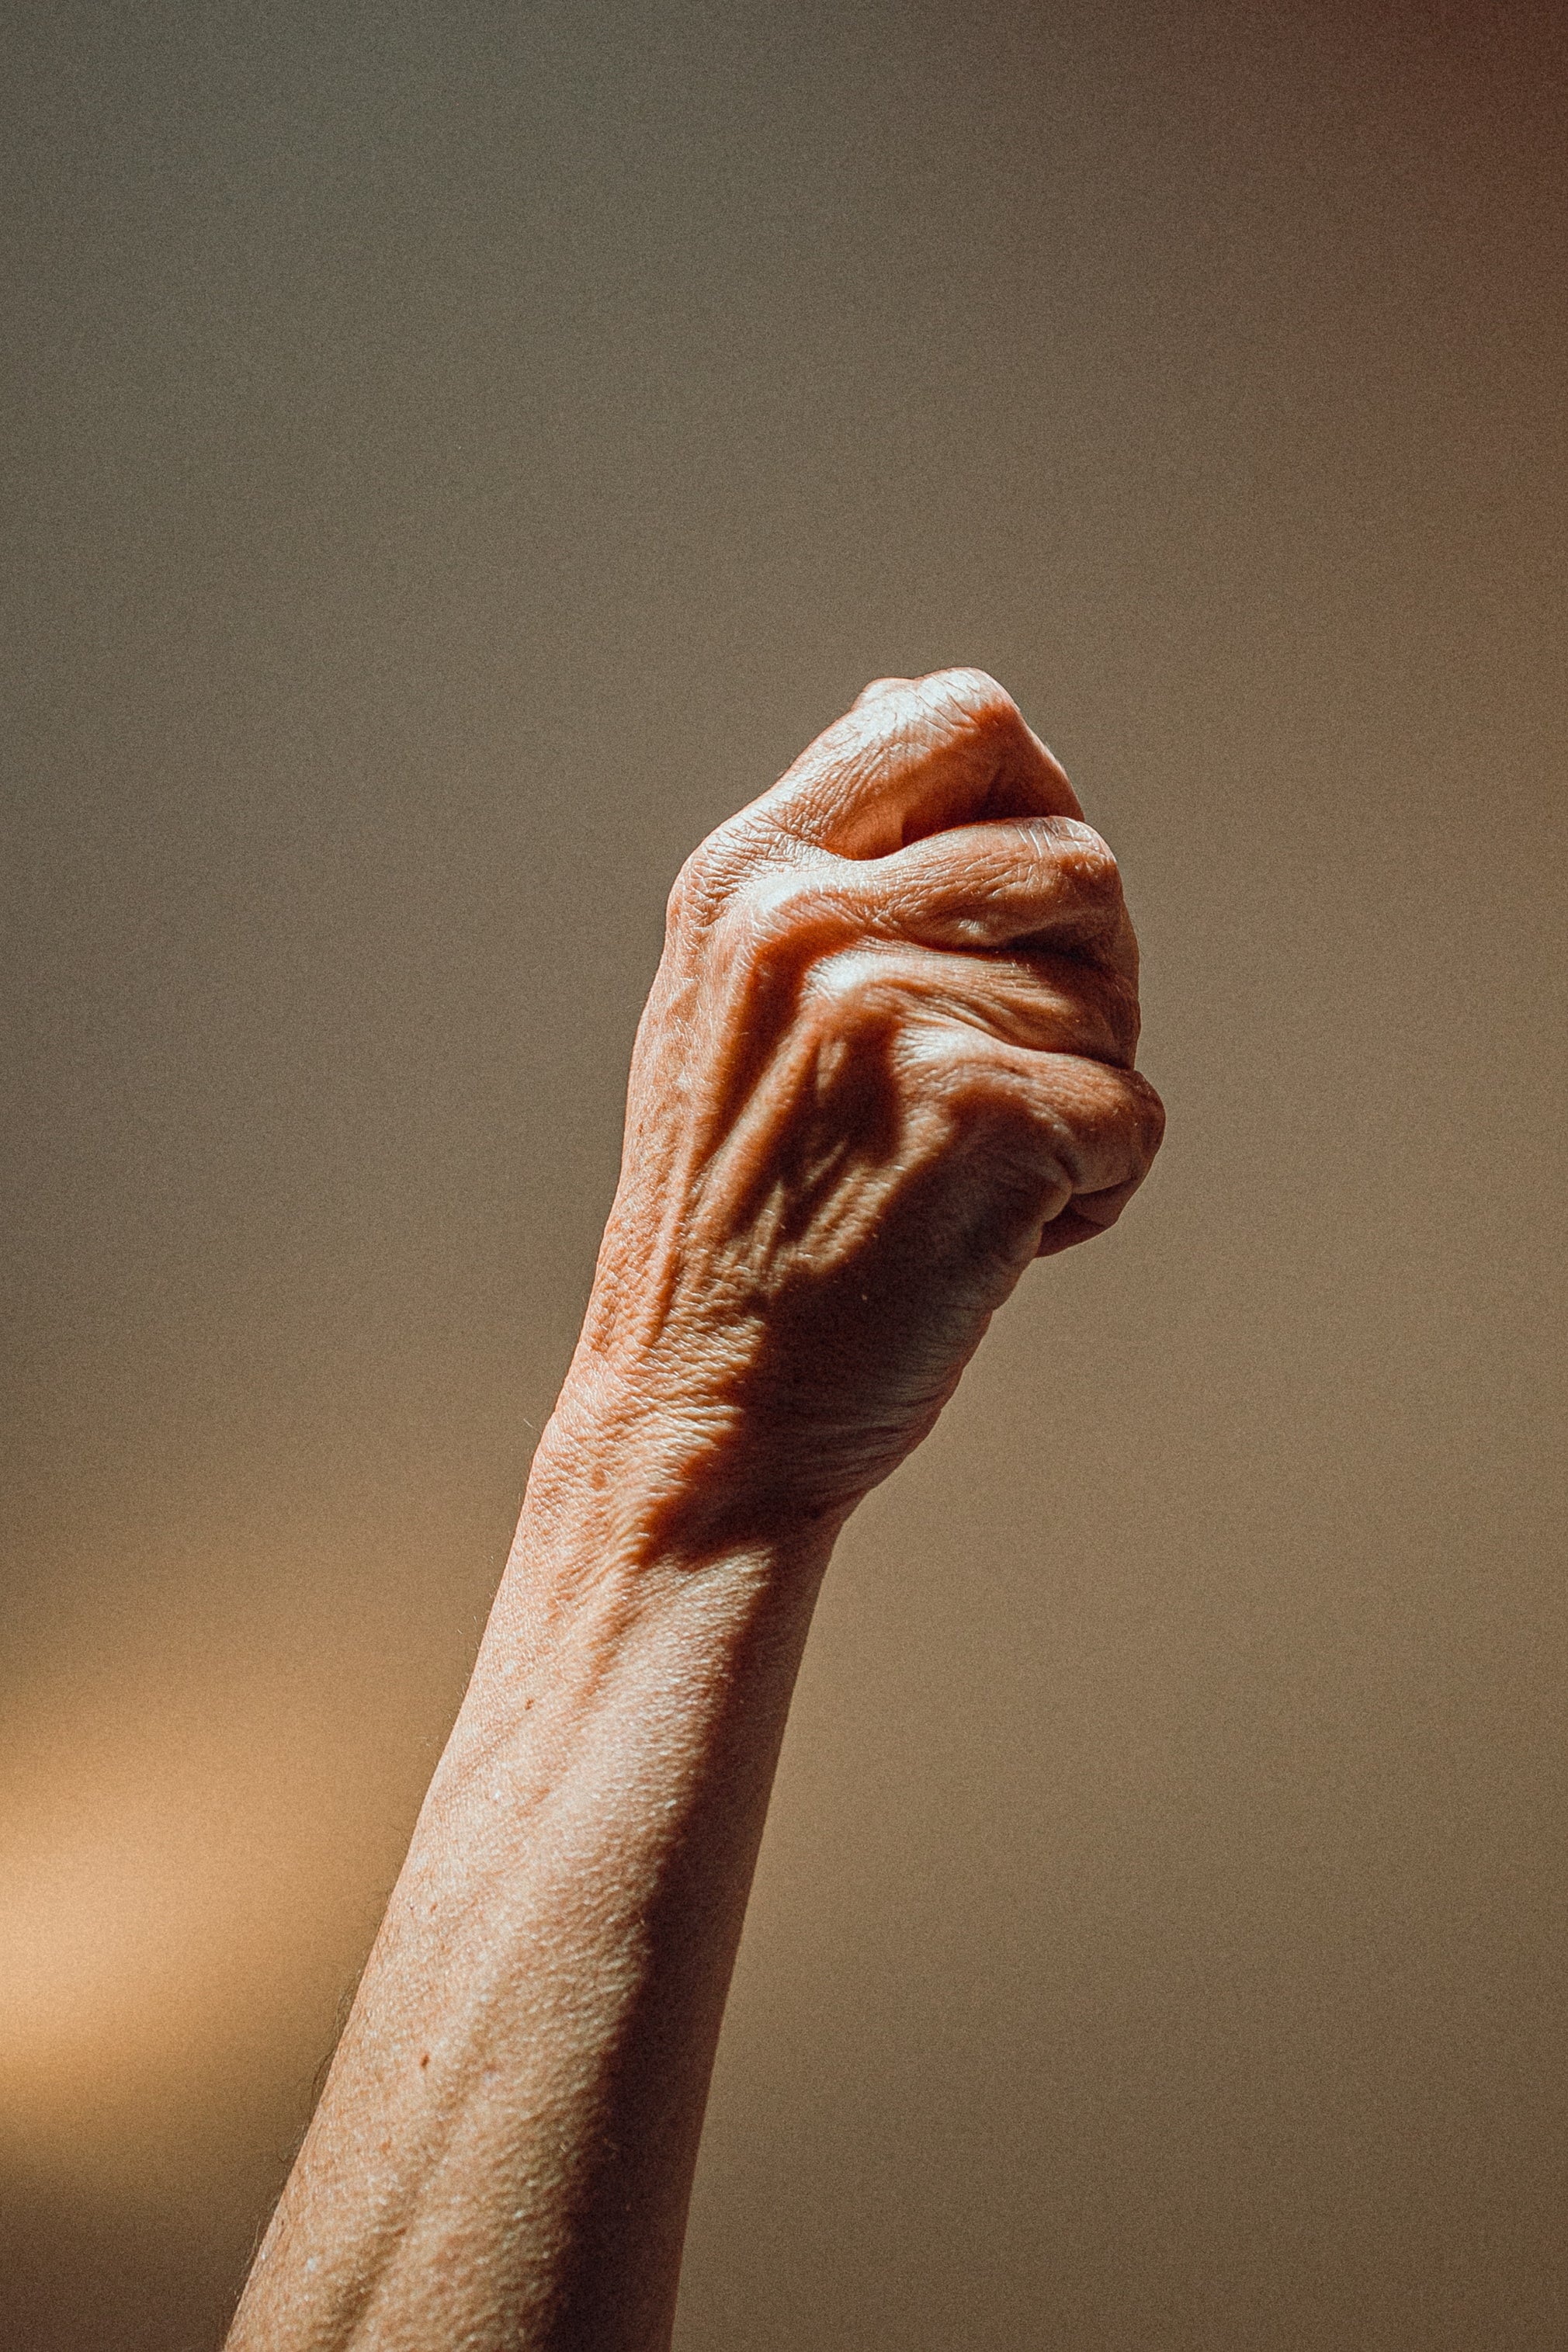 Can collagen supplements help with arthritis?